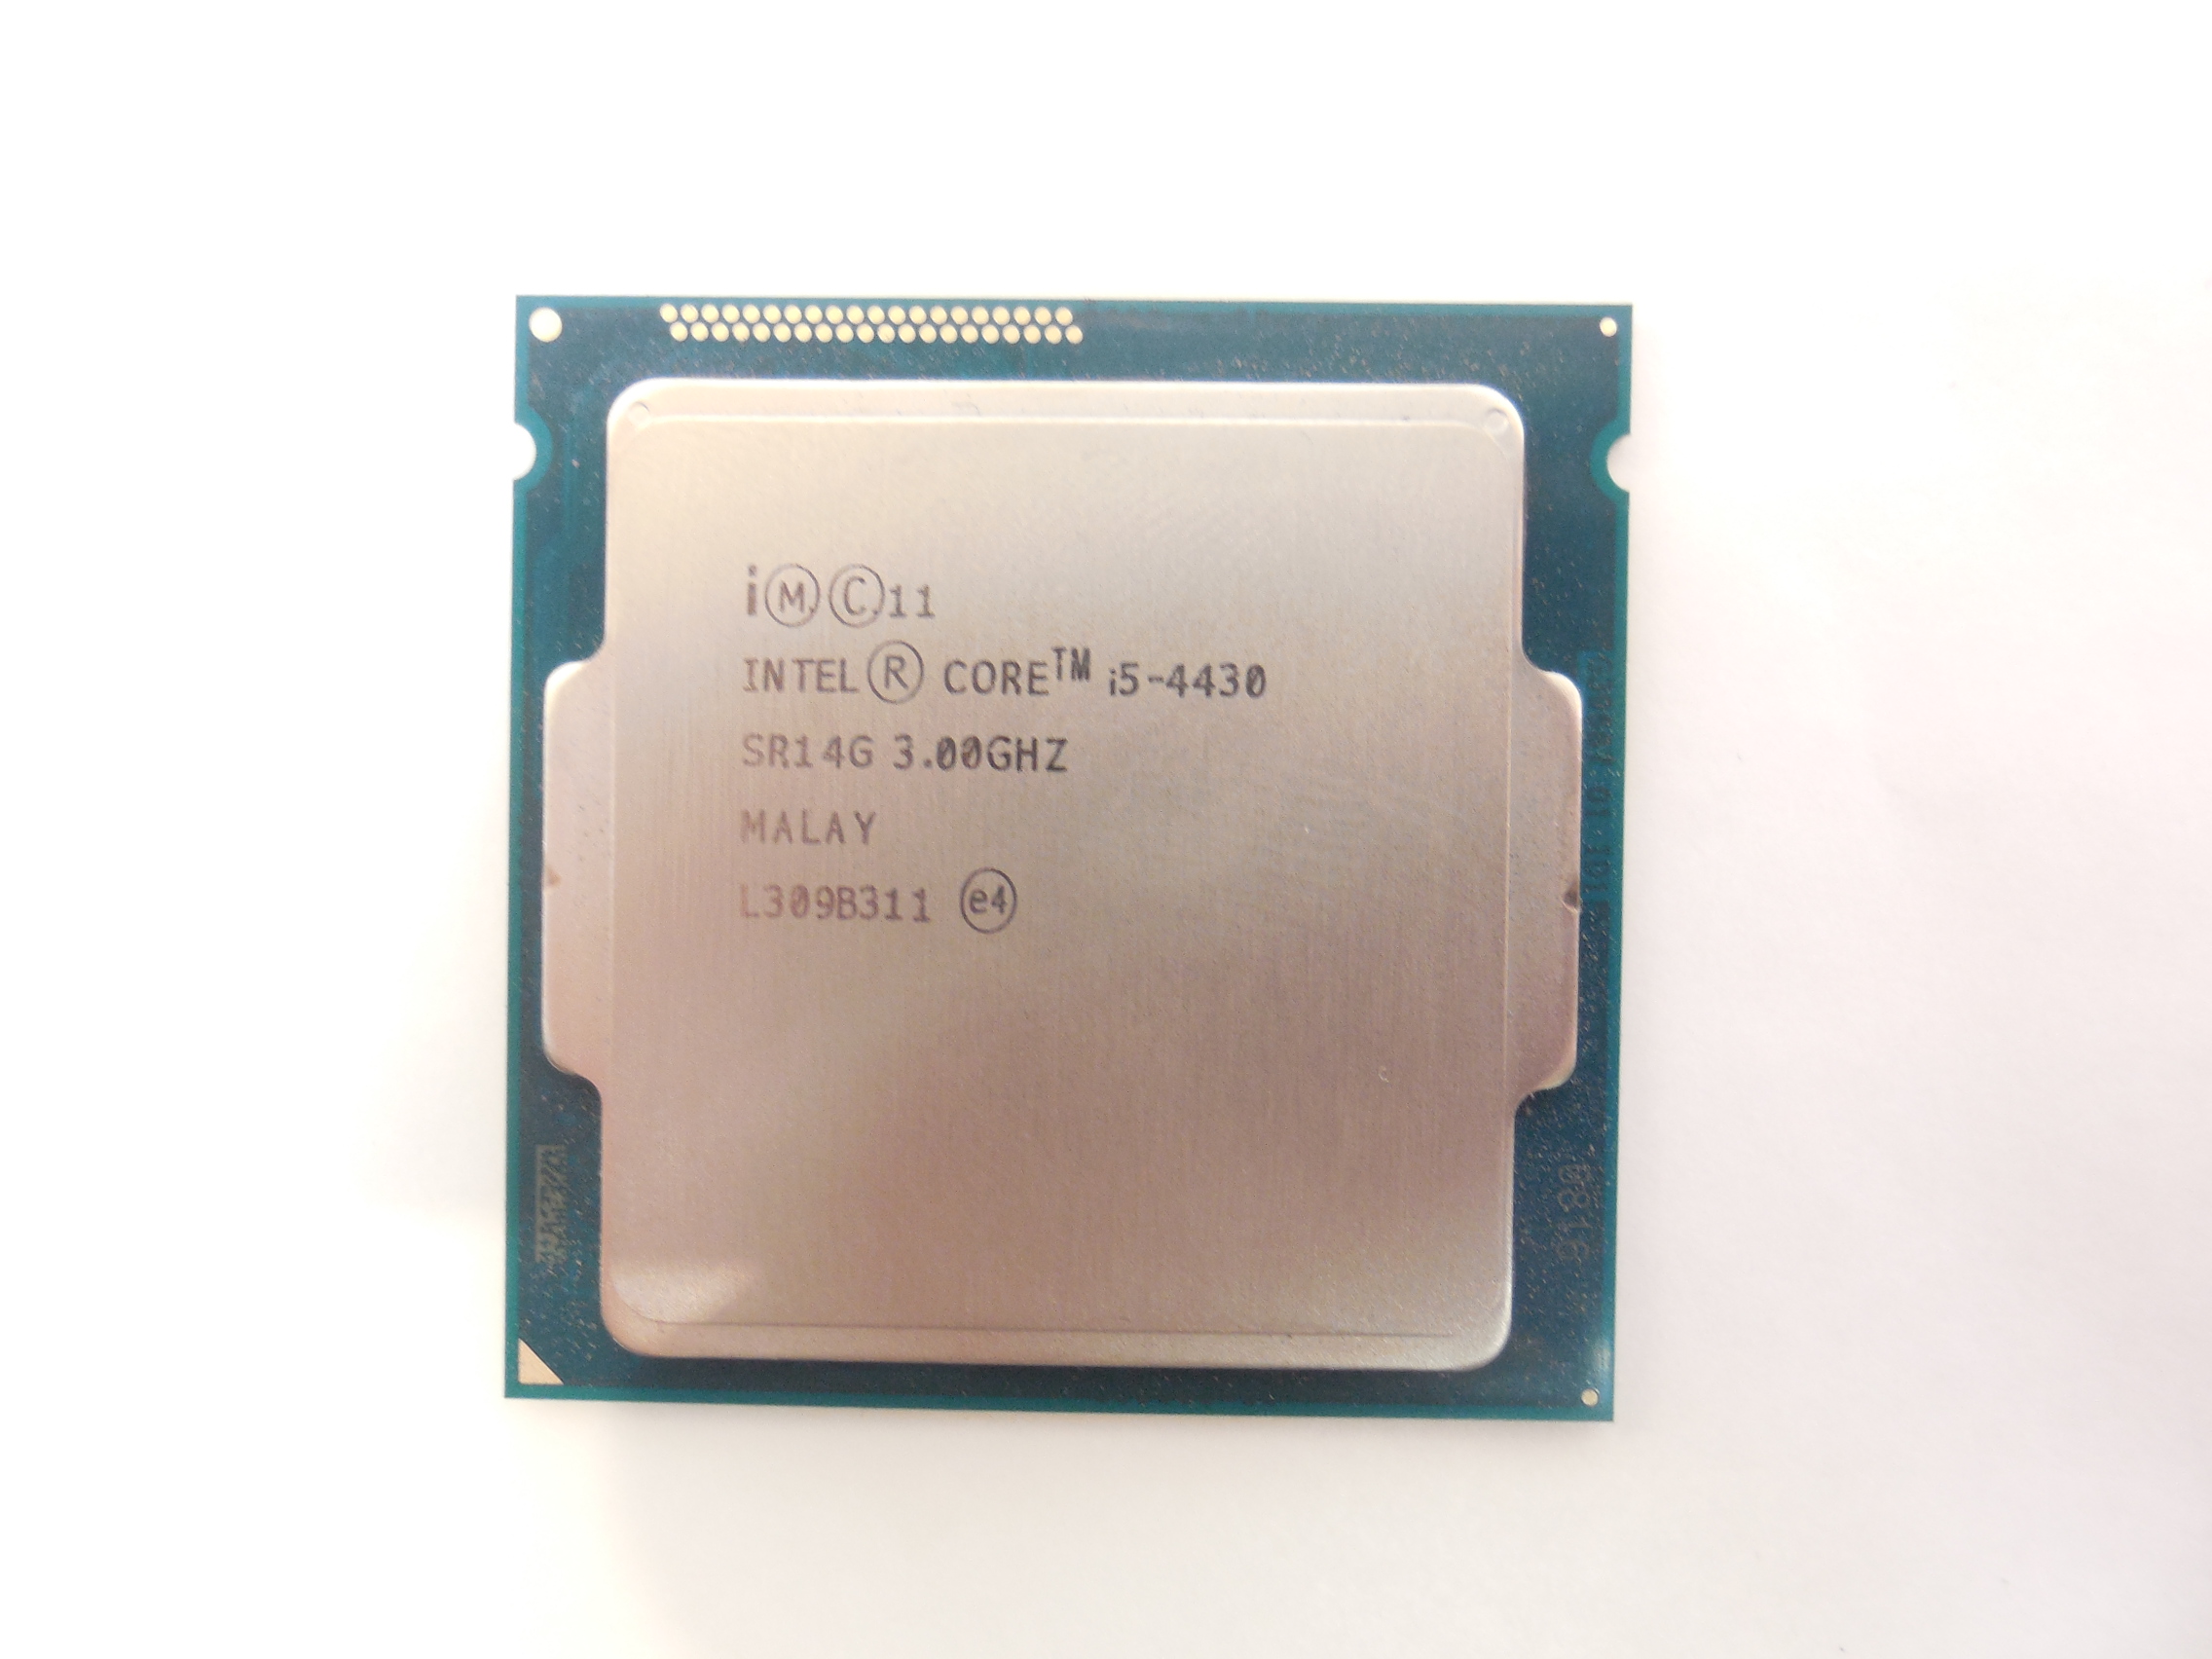 Intel i3 3.3 ghz. Intel(r) Core(TM) i5-4430 CPU @ 3.00GHZ. Intel(r) Core(TM) i5-4430 CPU @ 3.00GHZ 3.00 GHZ. Процессор Intel Core i7-4770 Haswell lga1150, 4 x 3400 МГЦ, OEM. Intel Core i3 — 4430.